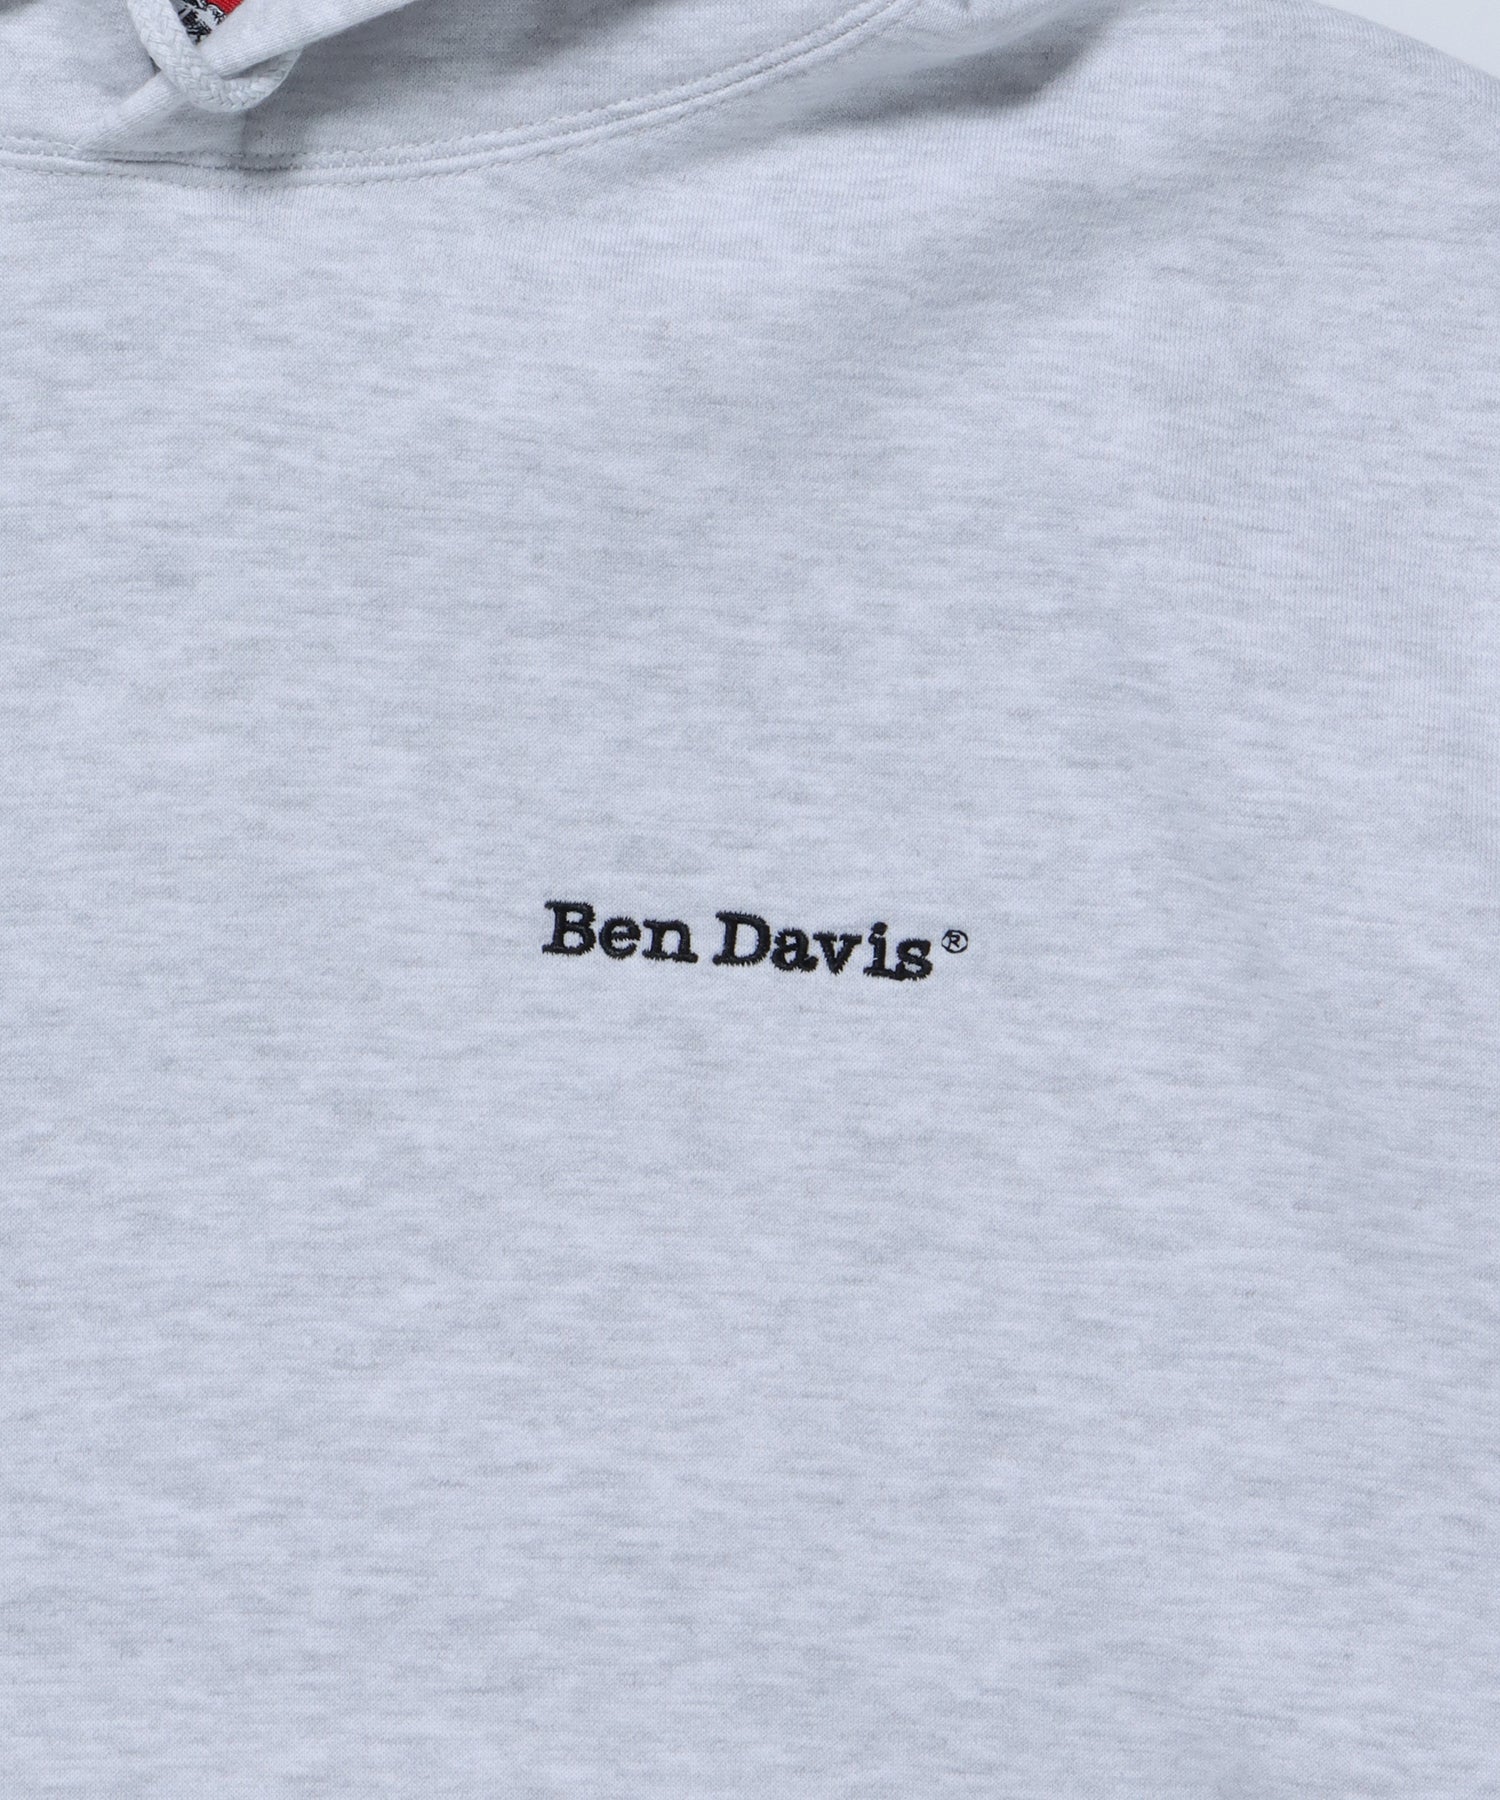 【BEN DAVIS(ベンデイビス)】 HEAVY SWEAT HOODIE NVL / ビッグ スウェット ヘビーウェイト 限定 パーカー オフホワイト